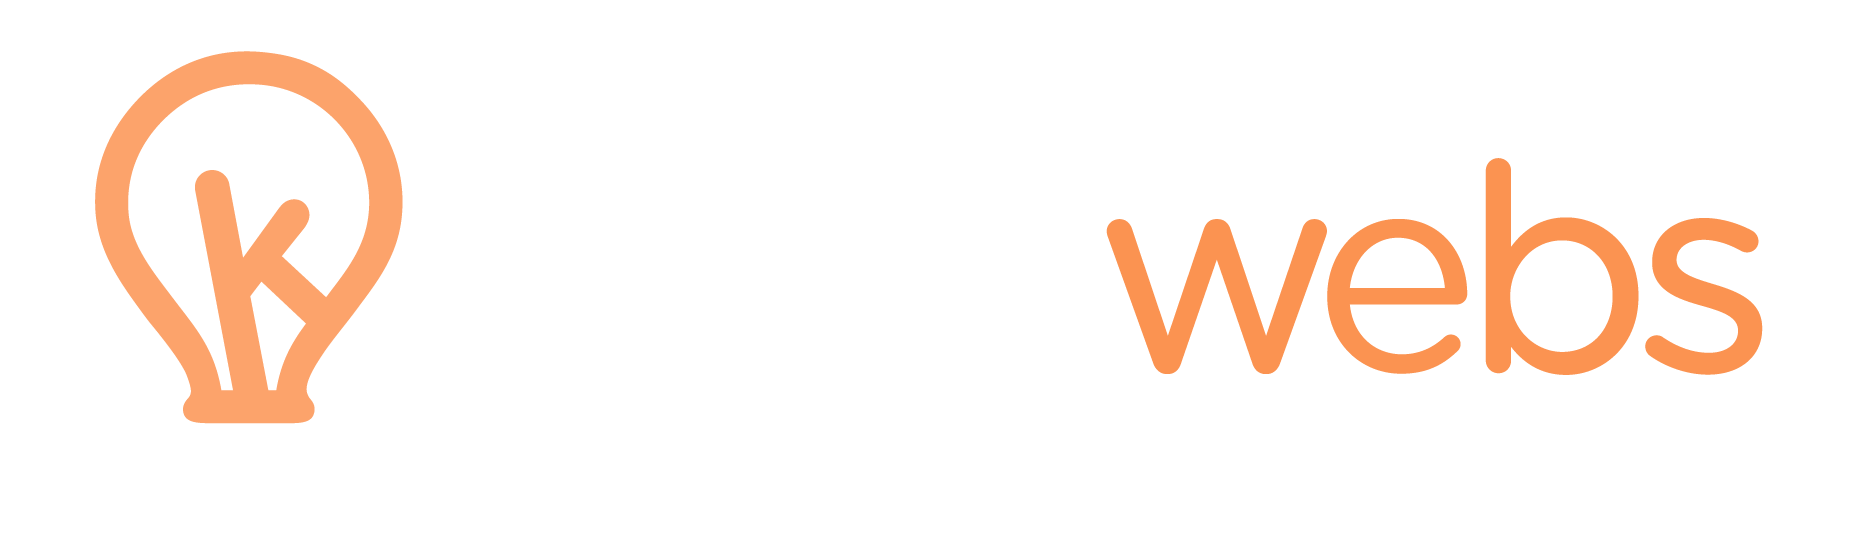 Kongwebs logo